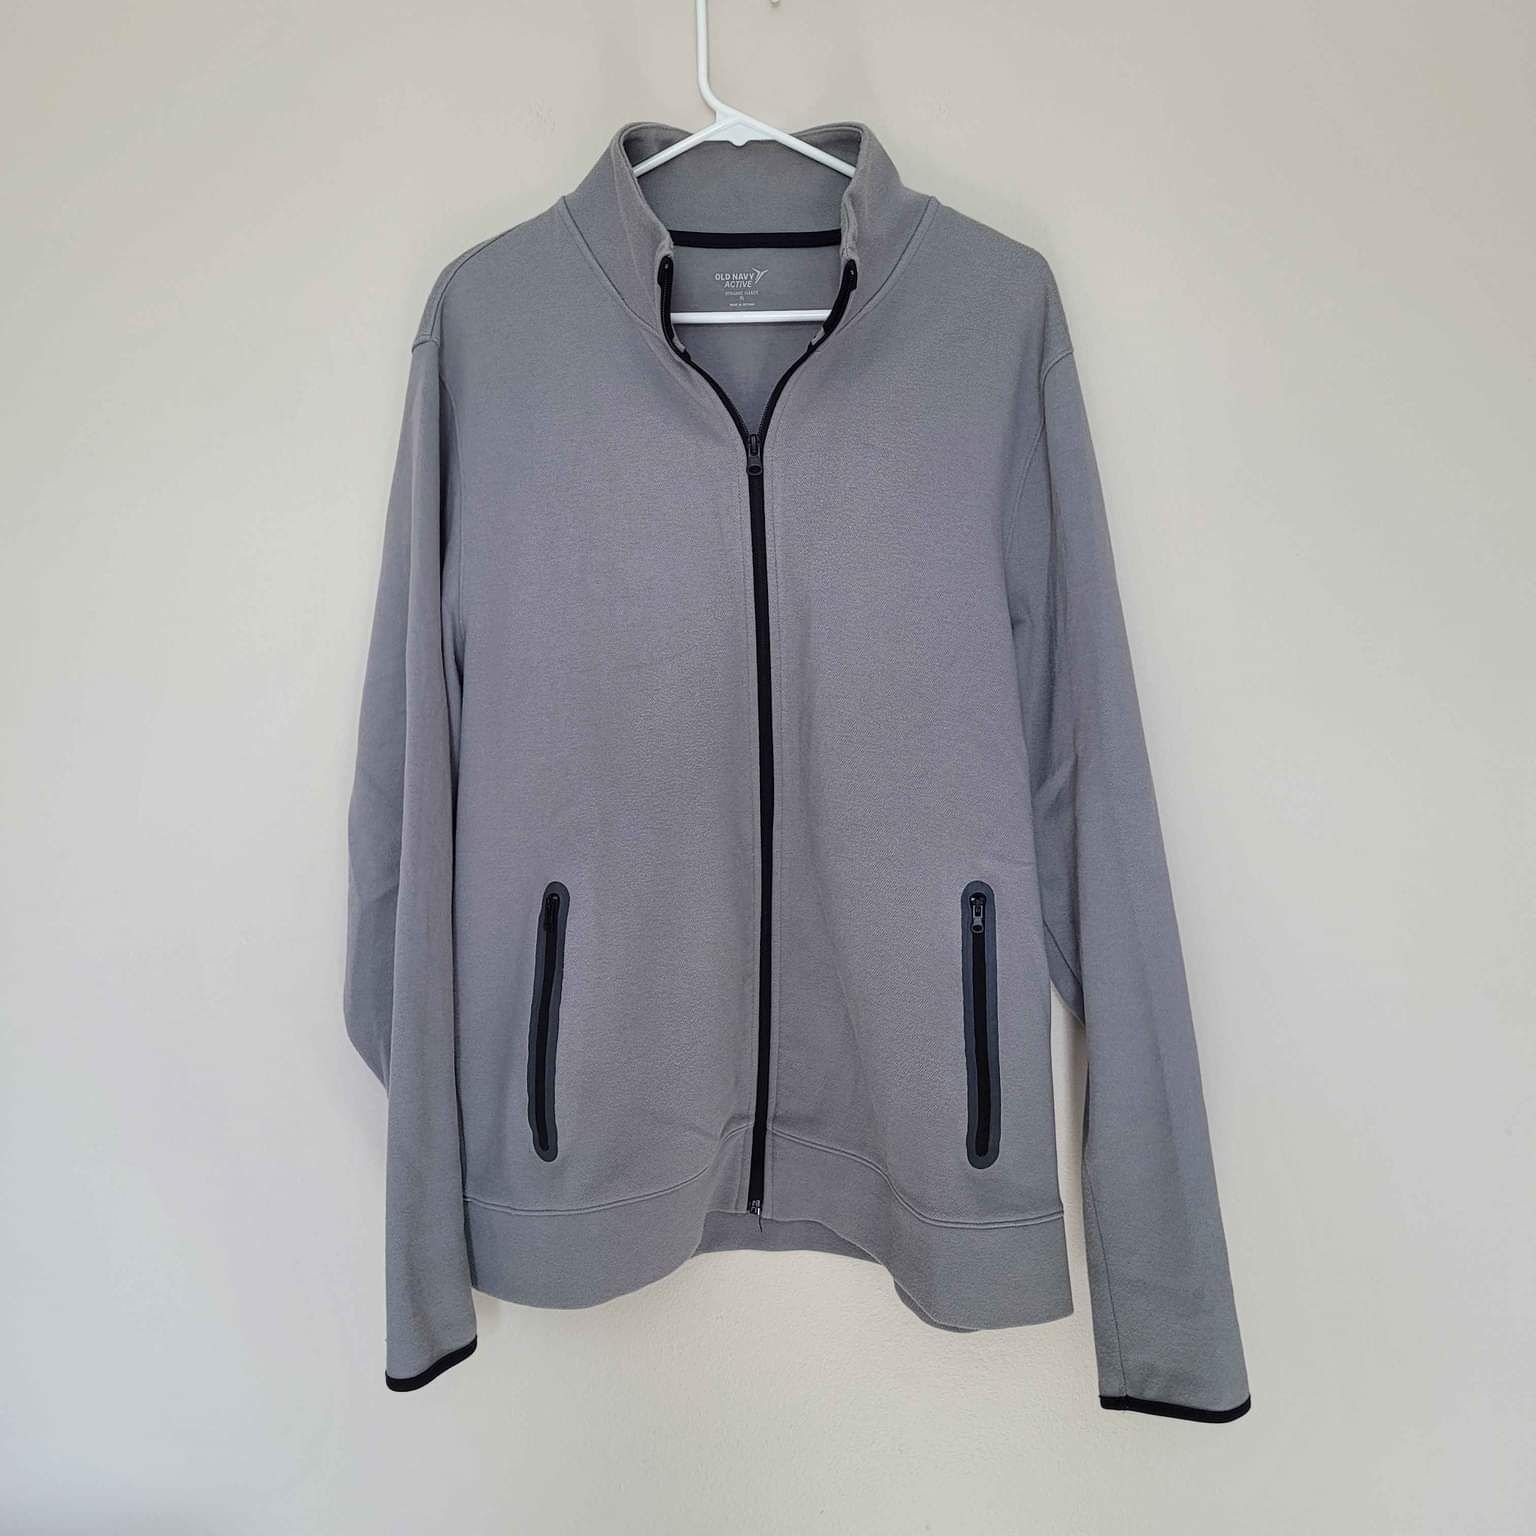 Old Navy Sctive Dynamic Fleece Light Grey Full Zip Sweater Mens Size XL cExbimu5a